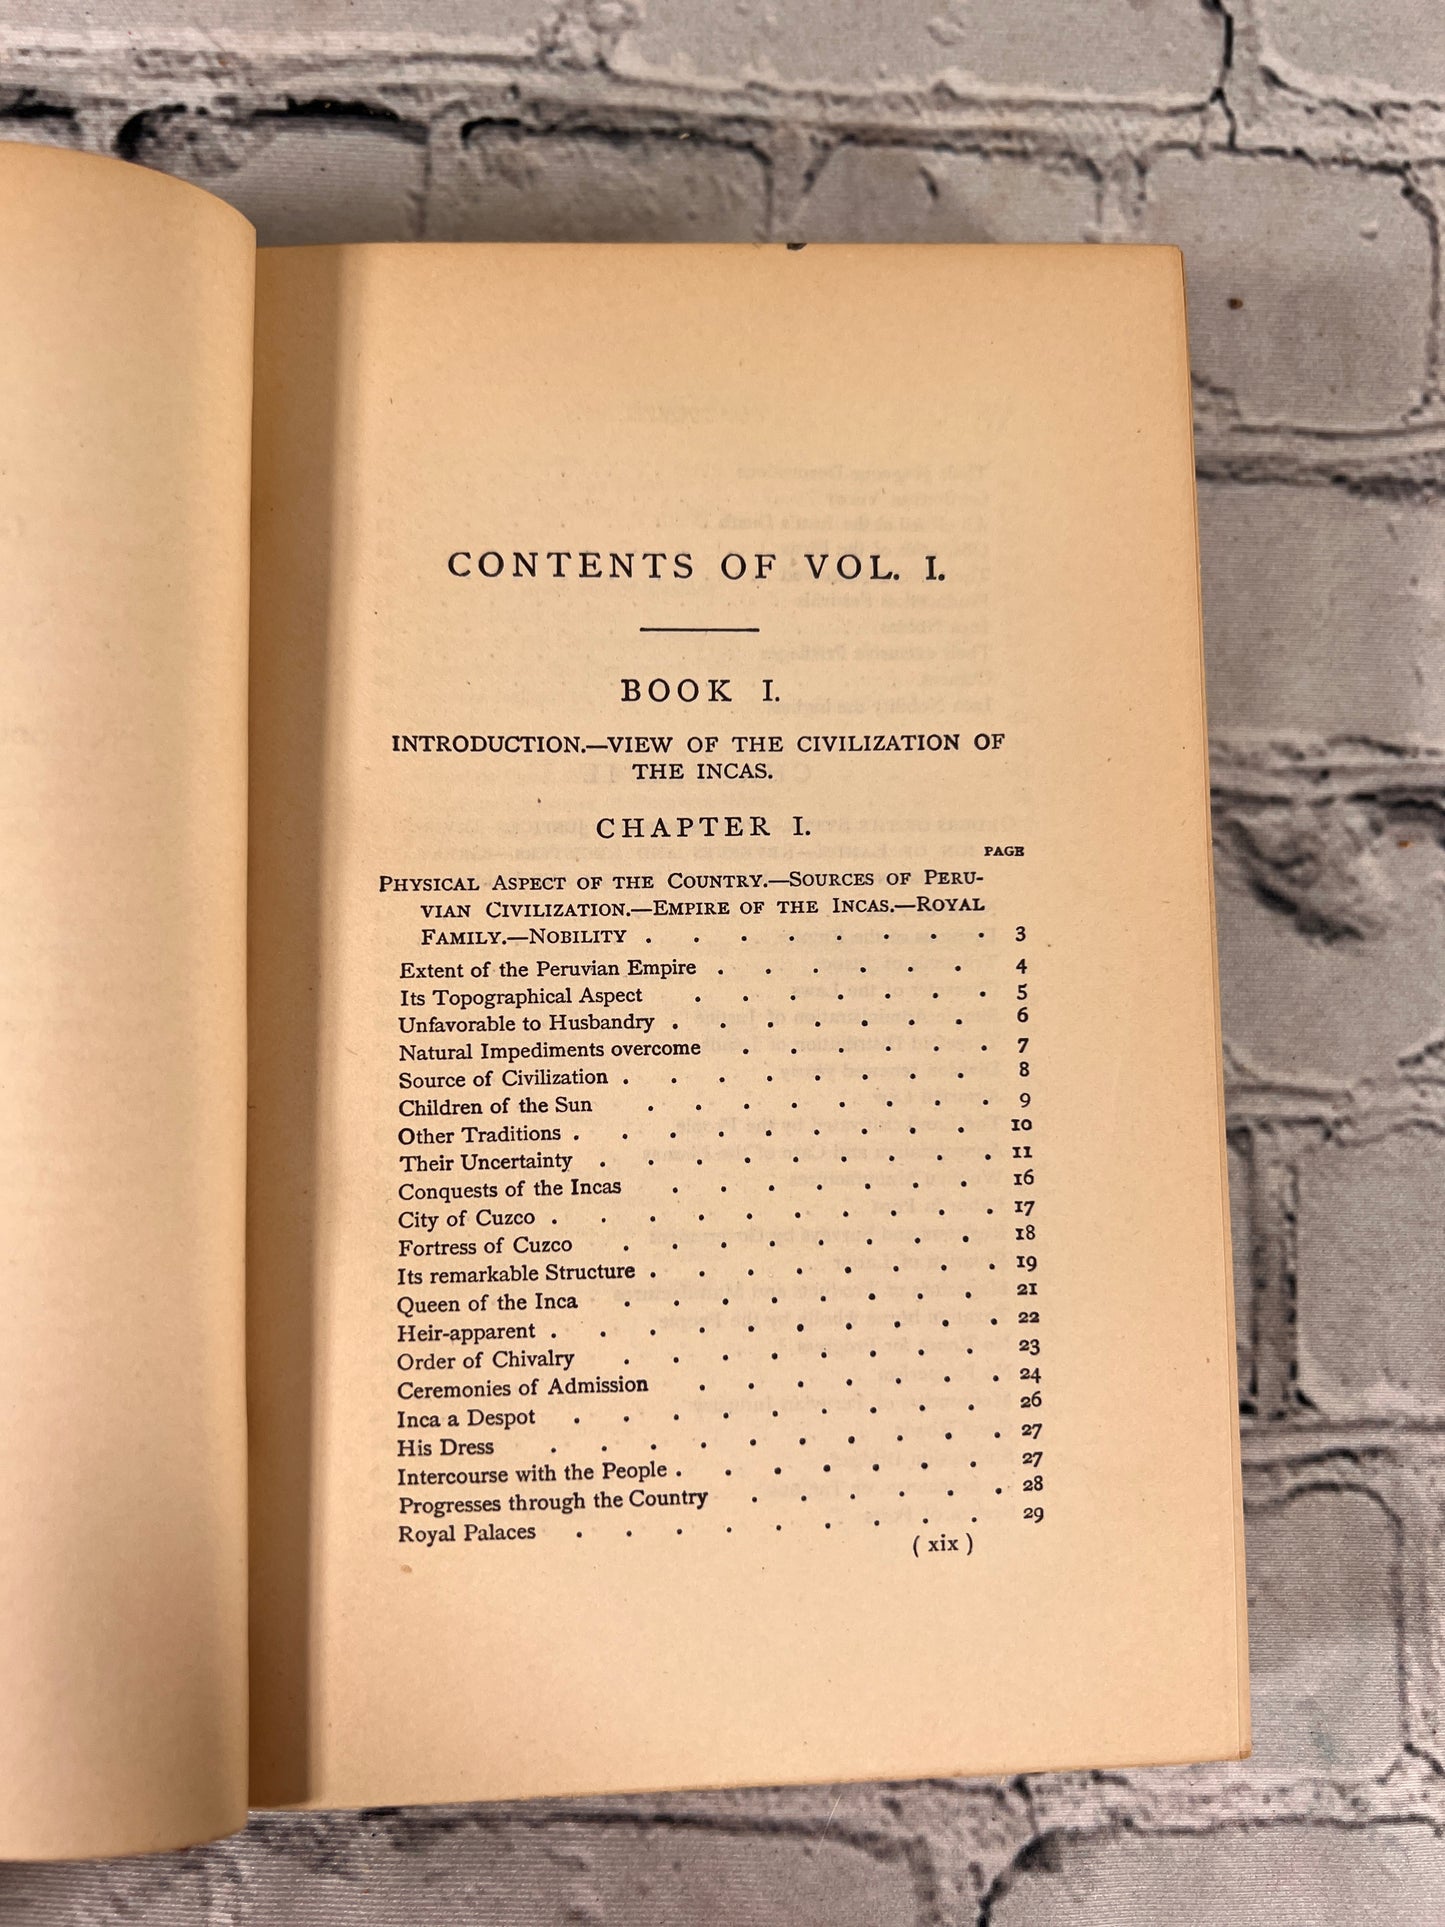 History of the Conquest of Peru Volume I. by William H. Prescott [1874]